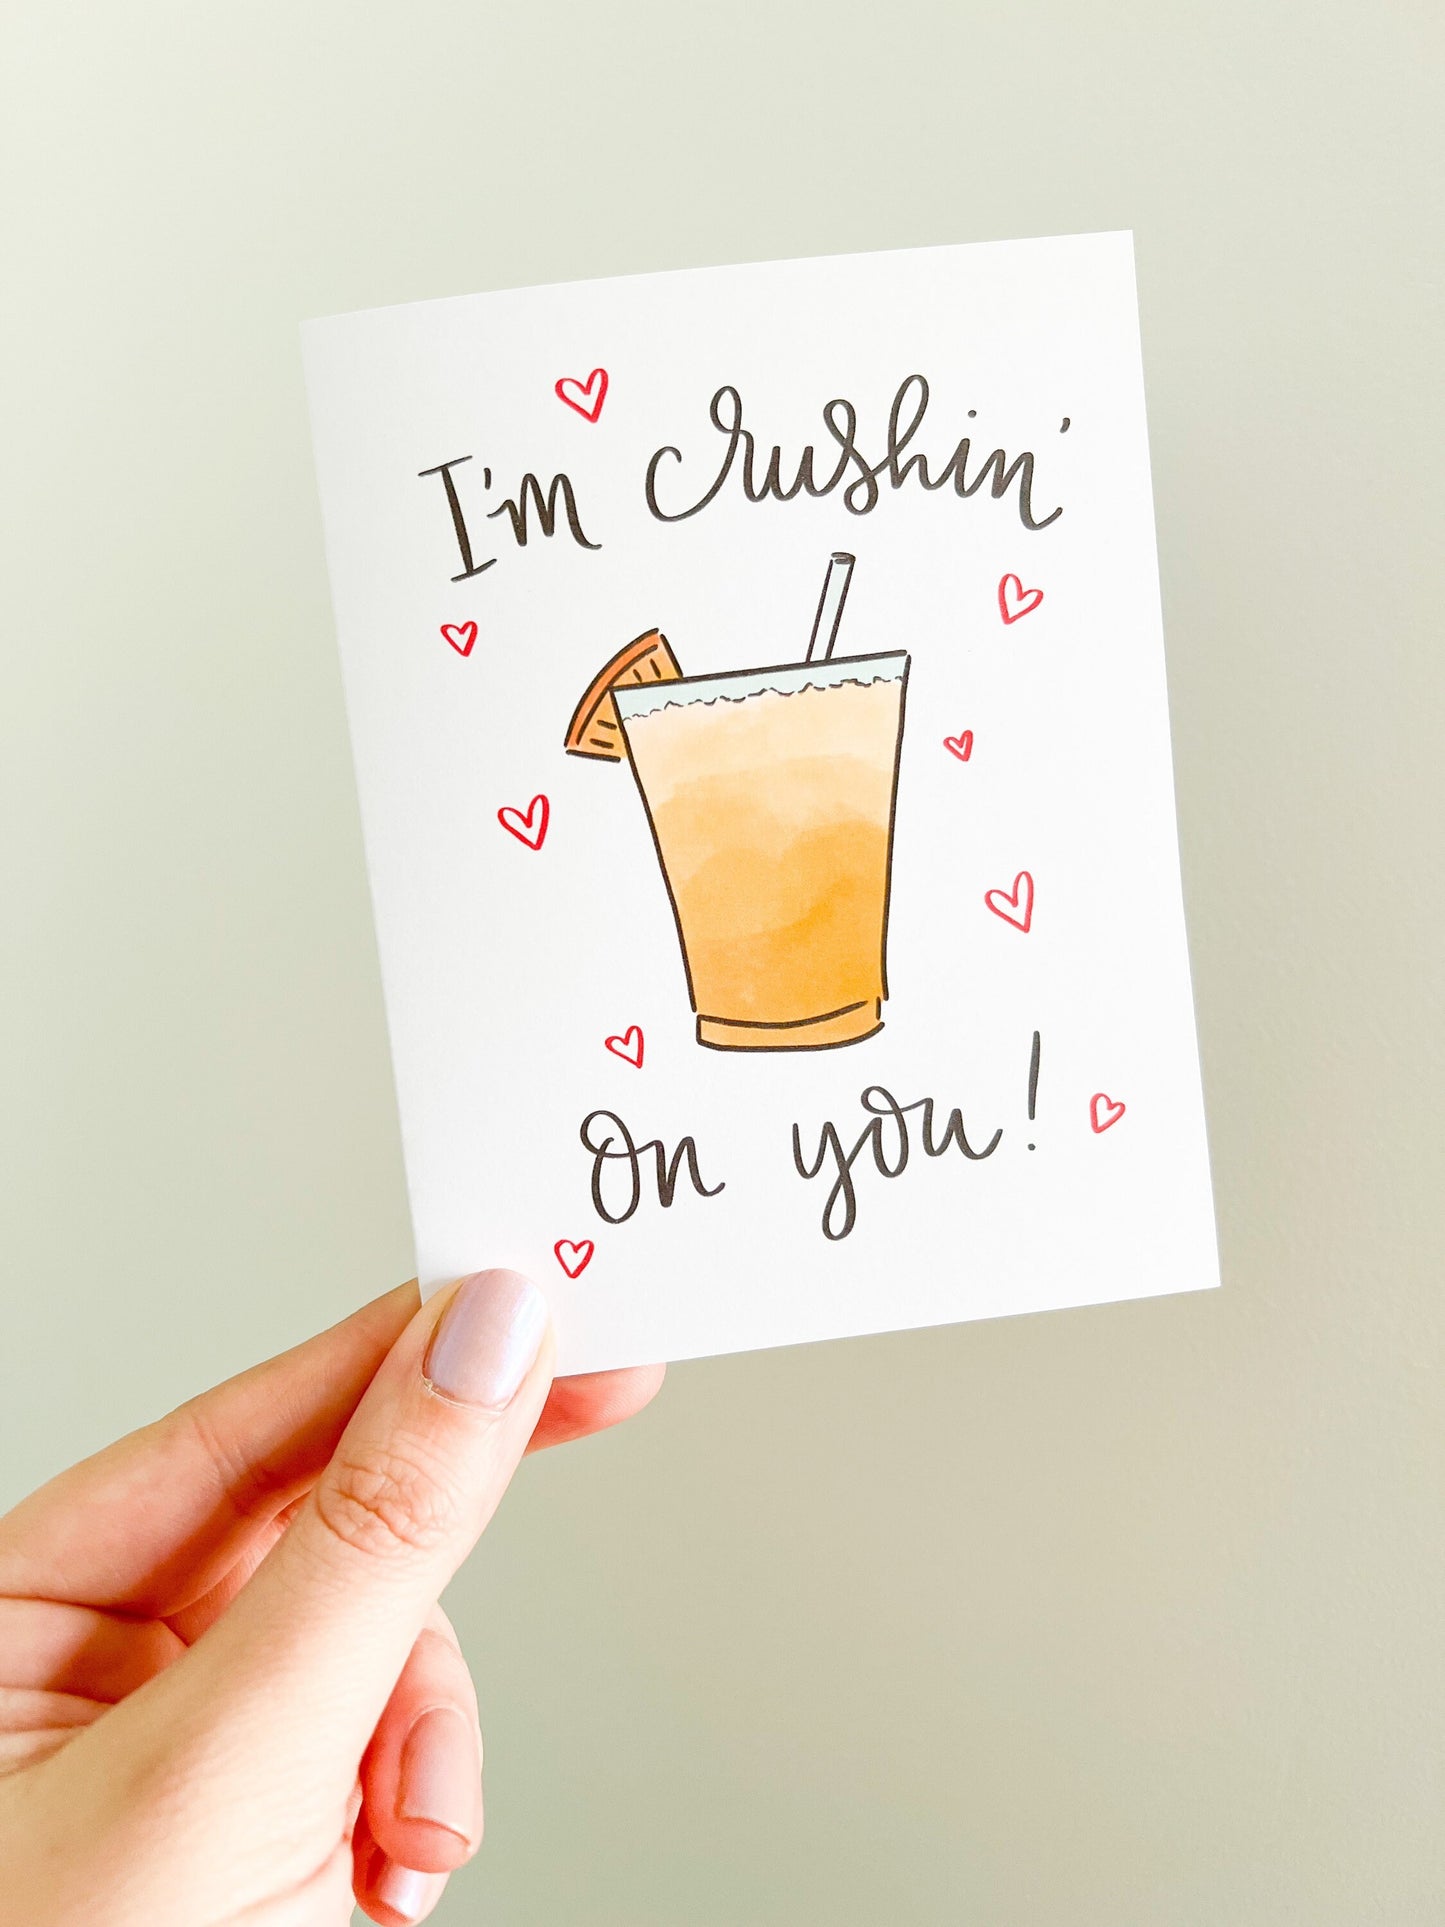 Orange Crushing on you card - Valentine’s Day card